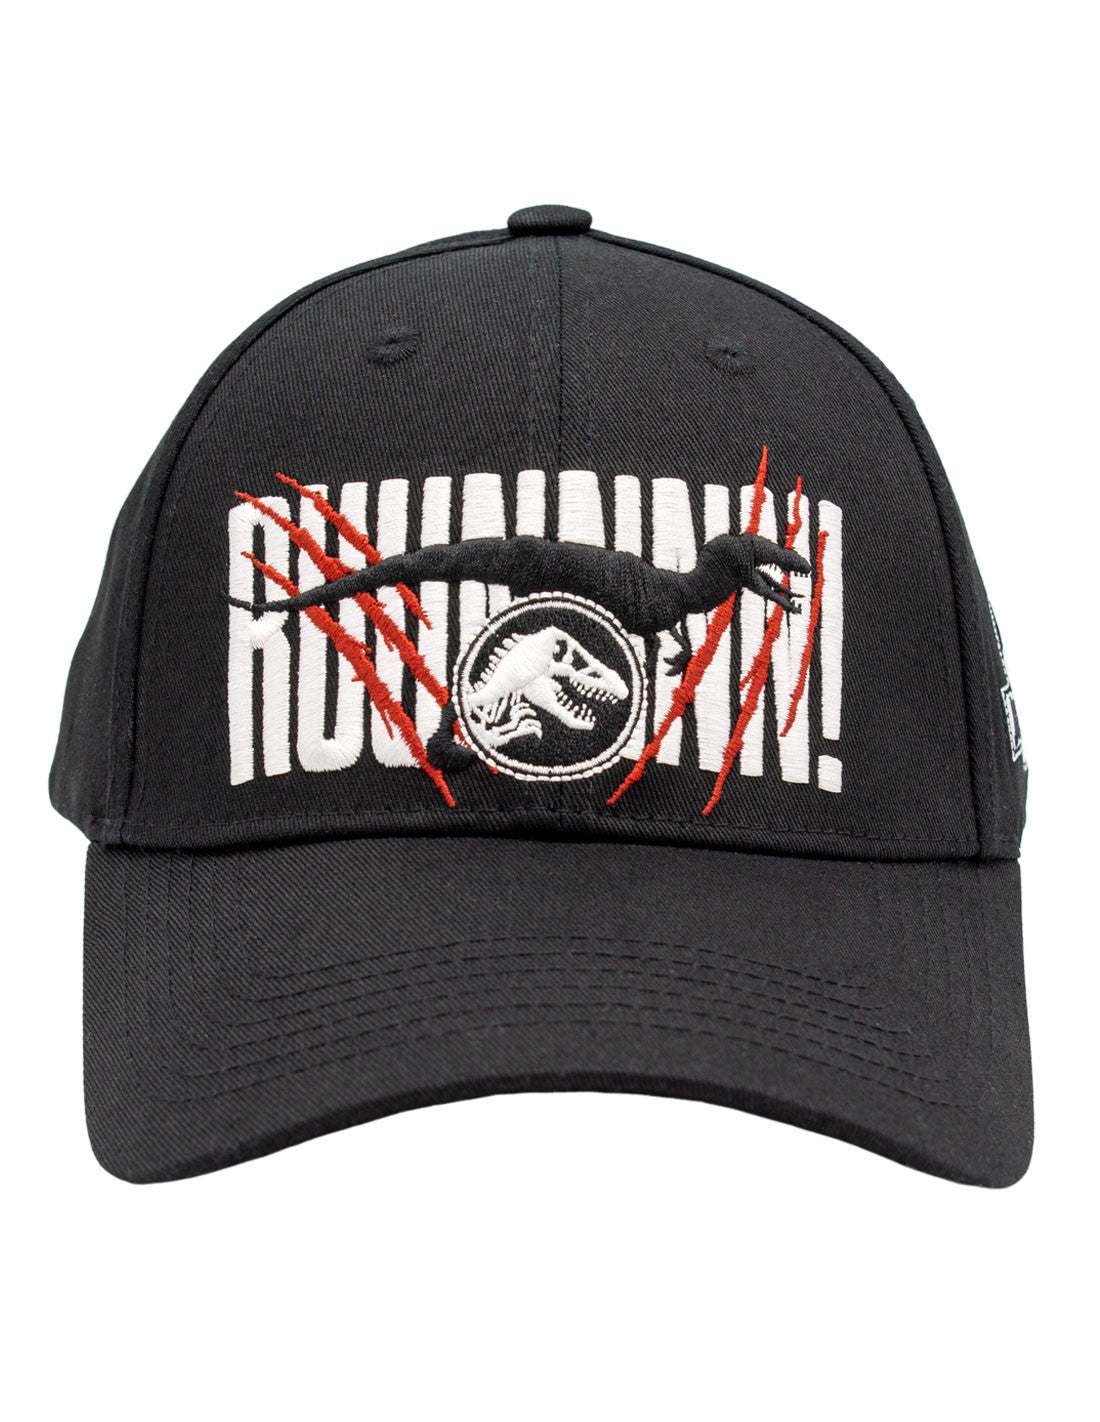 Jurassic Park Cap - Raptor Run!